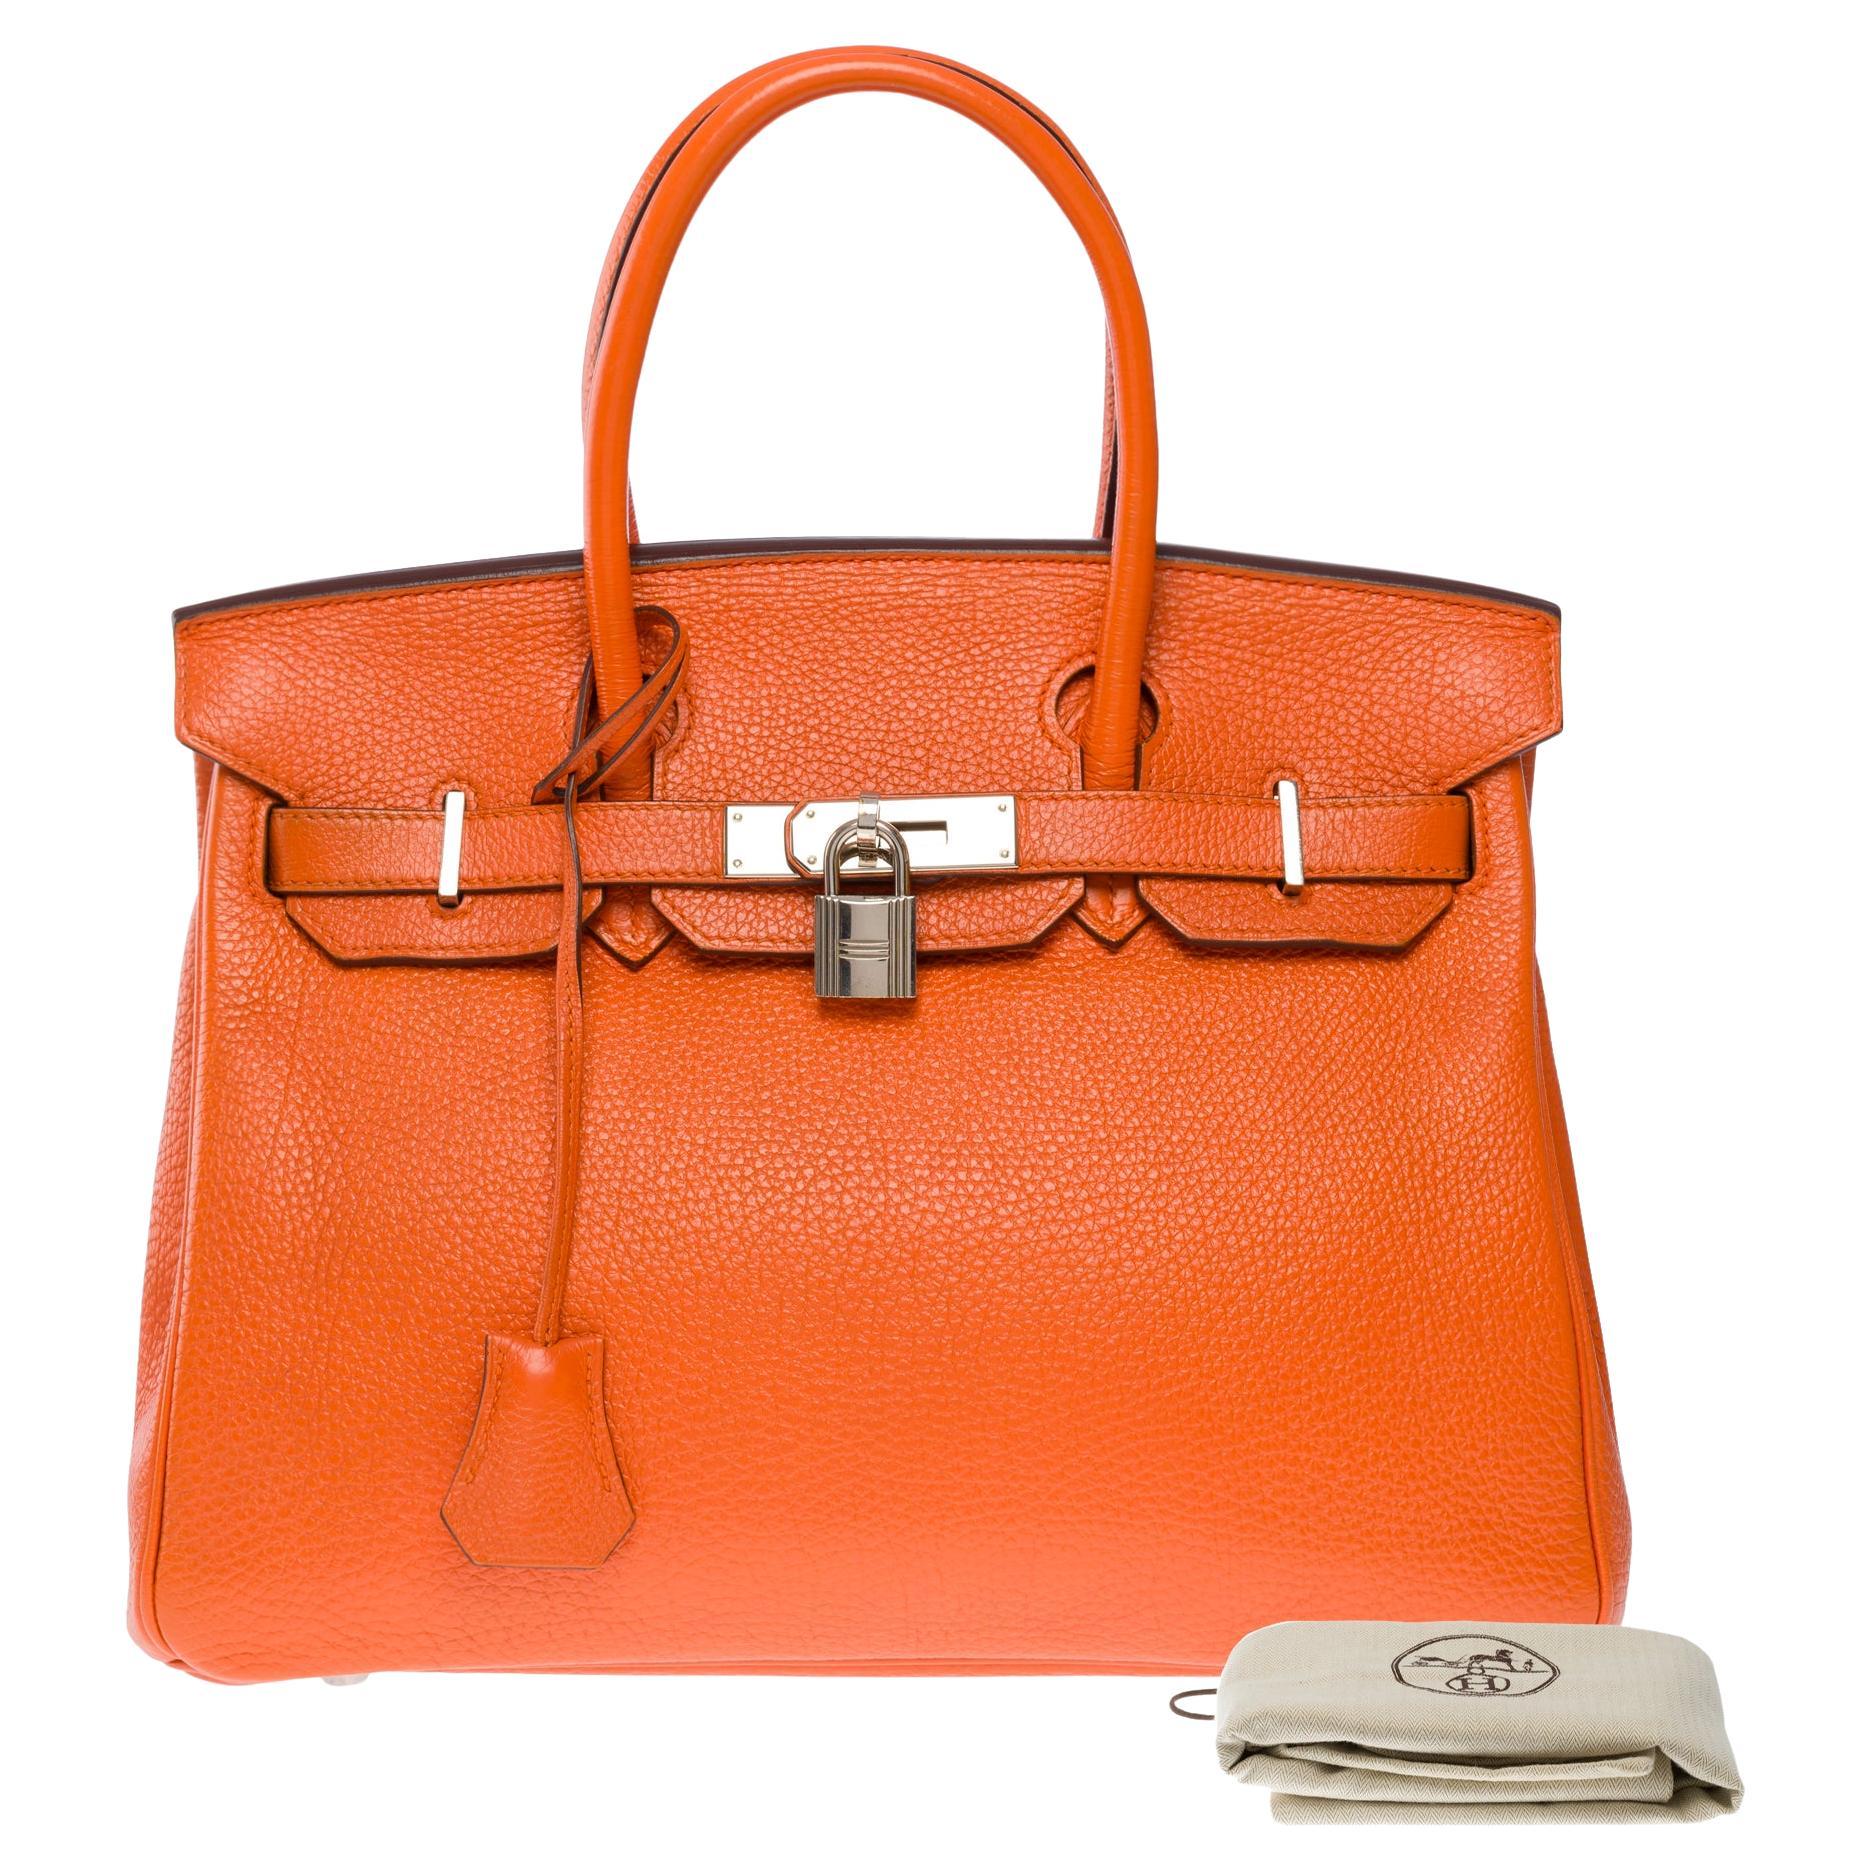 Amazing & Bright Hermès Birkin 30 handbag in Orange H Togo leather, SHW For Sale